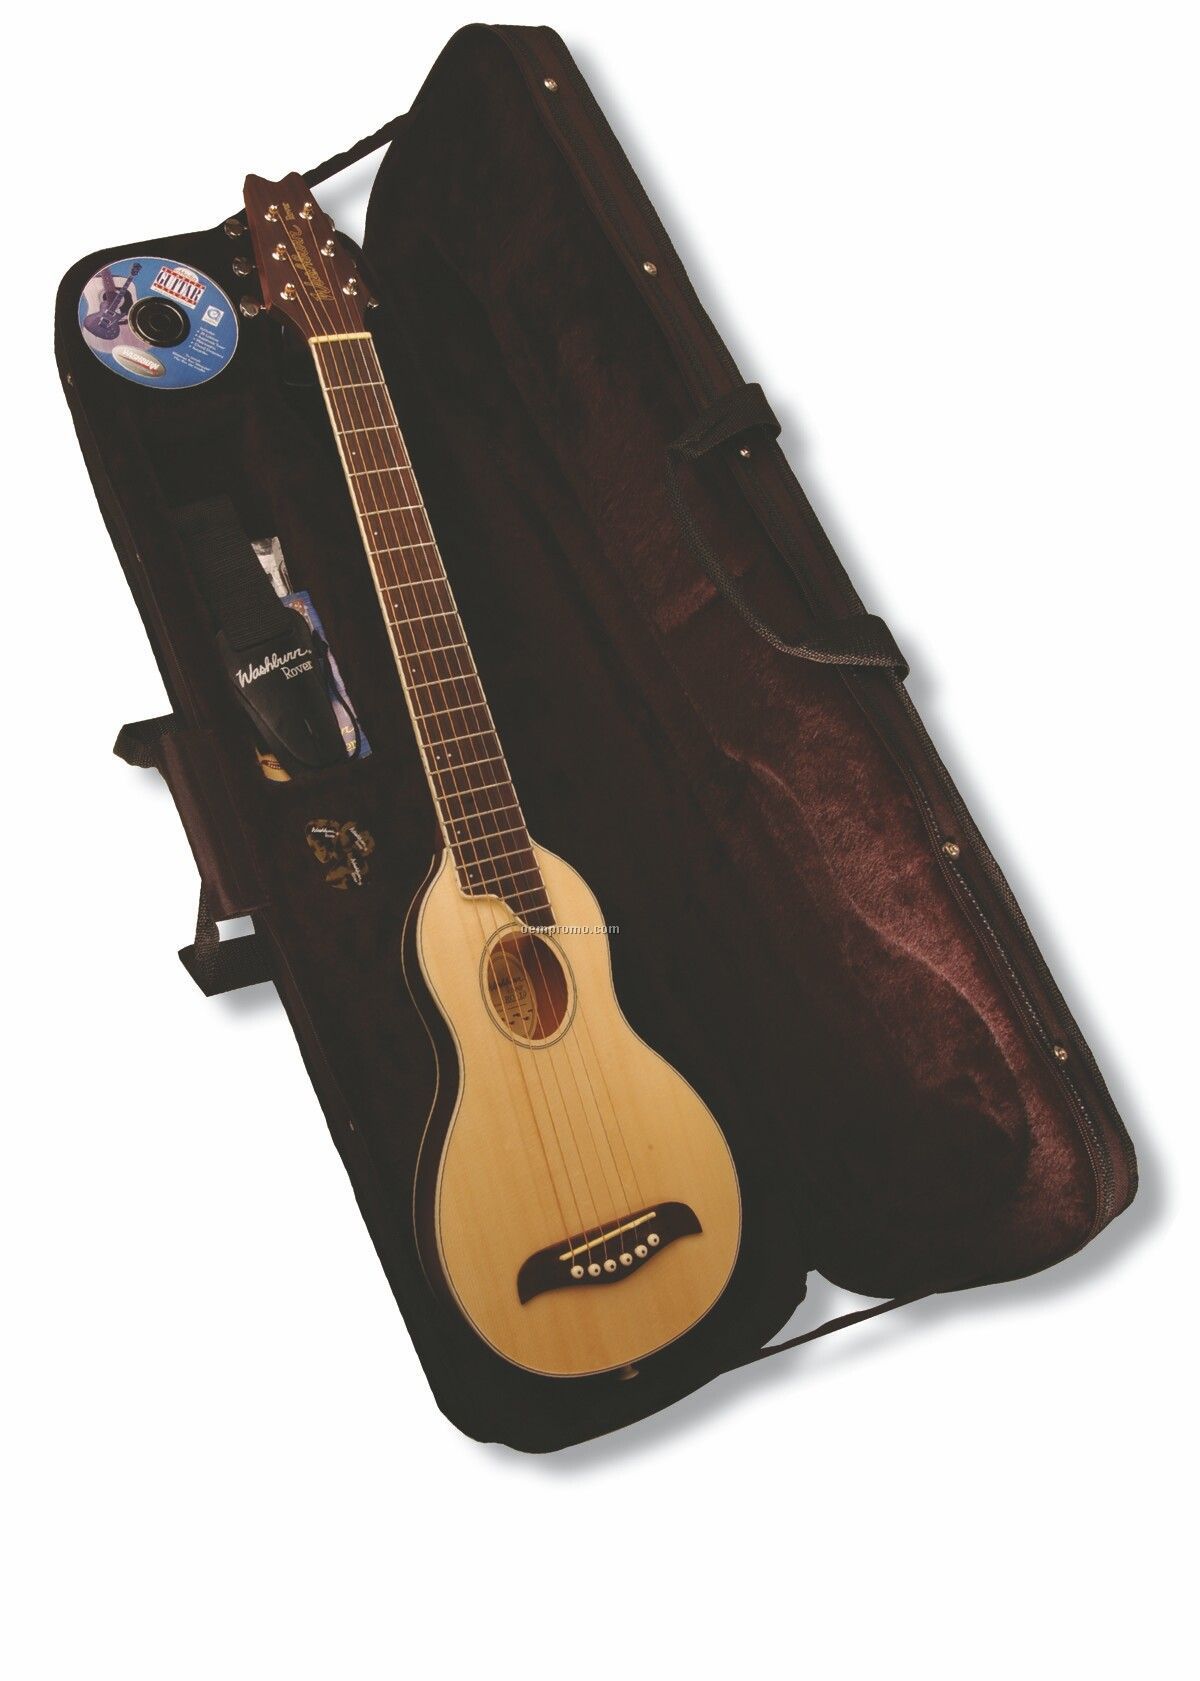 Washburn Rover Travel Guitar